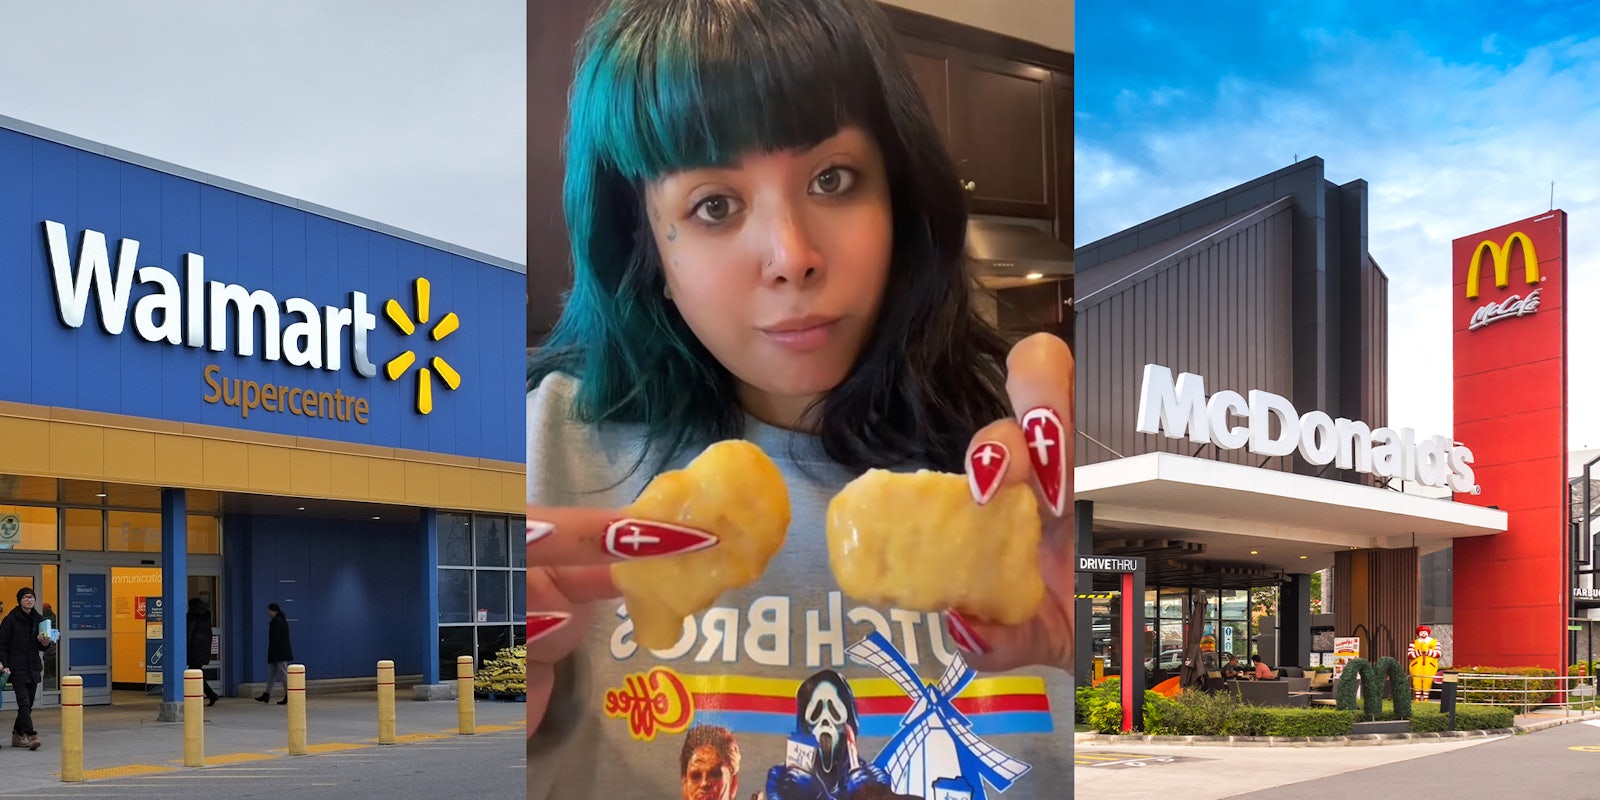 Parent tricks her kids into thinking she got McDonald's using Walmart, Ralphs chicken nuggets